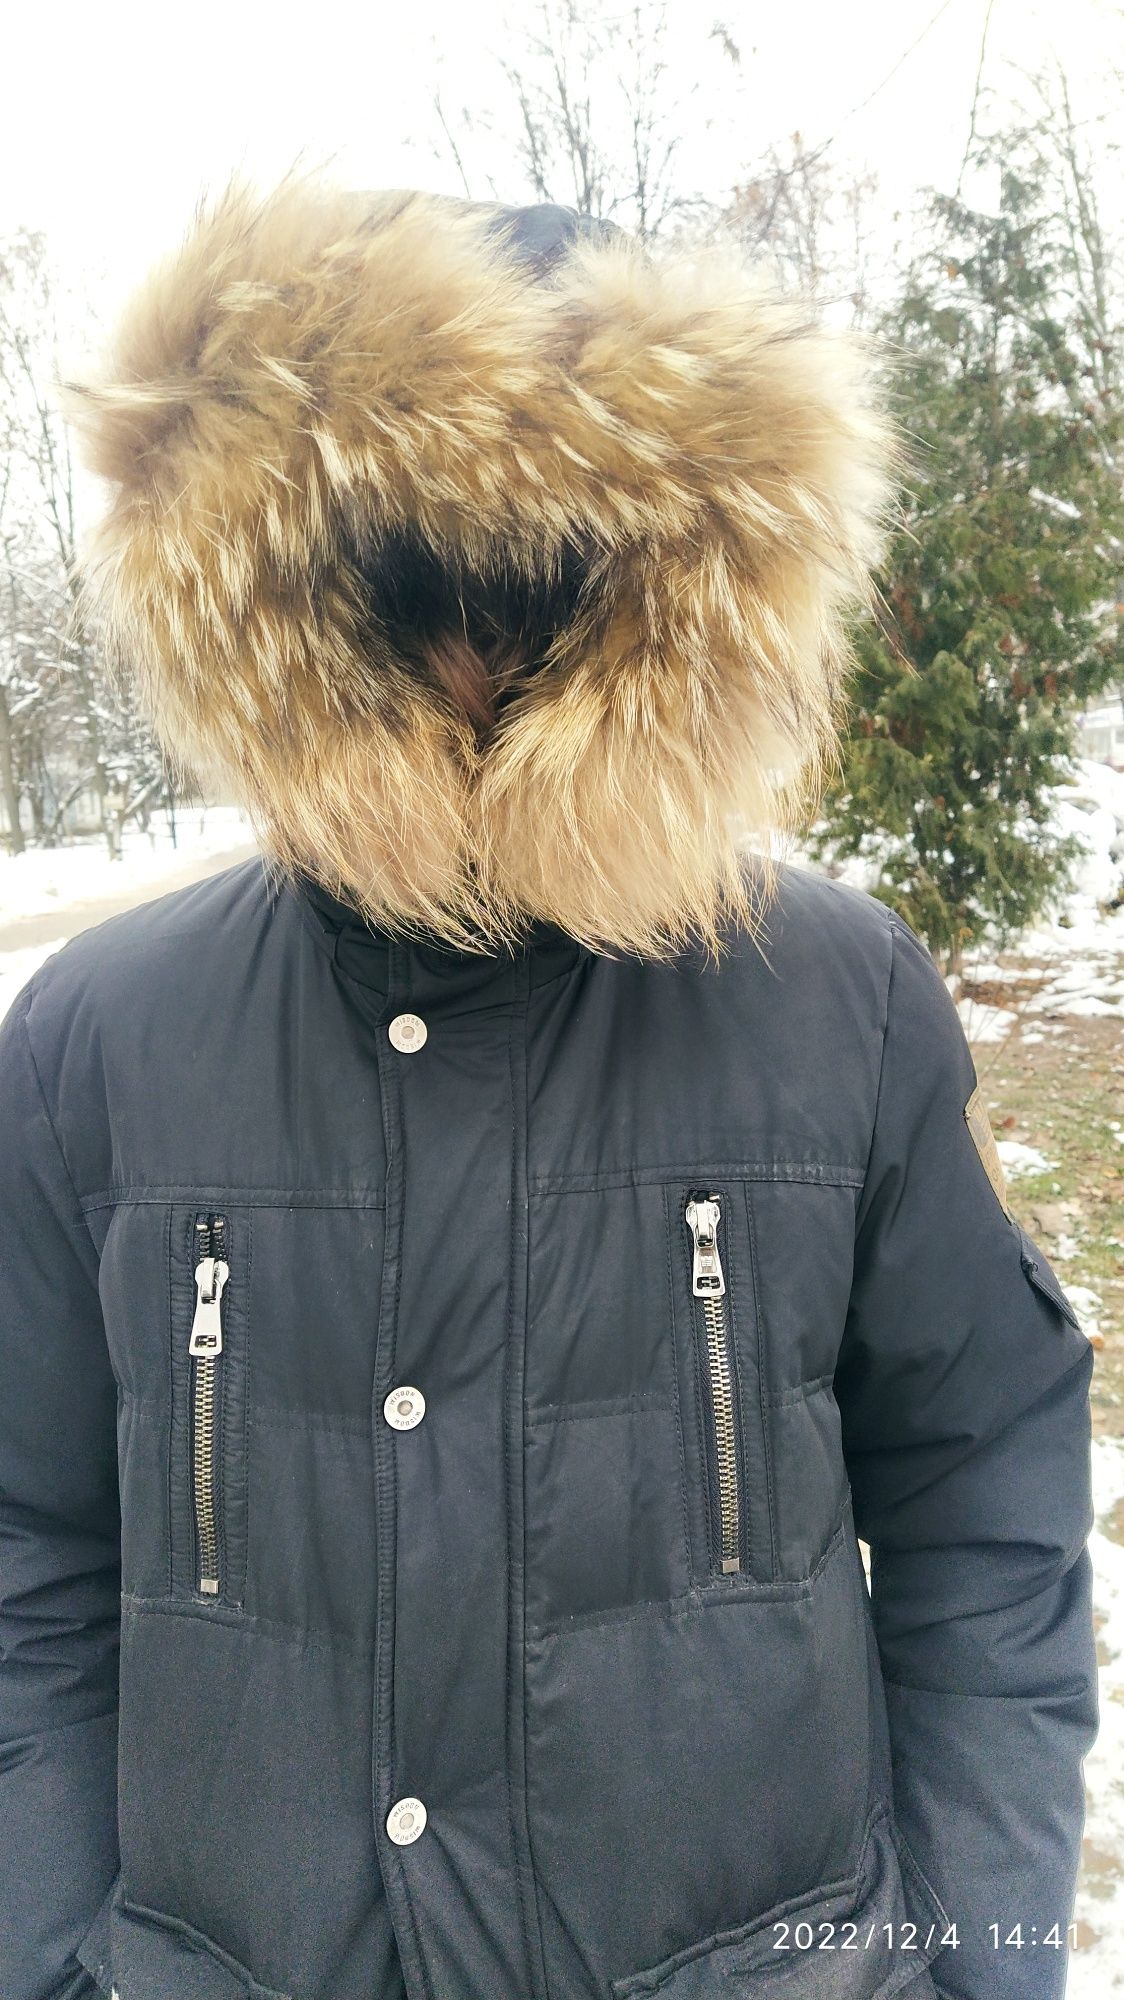 Пуховик куртка зимняя  рост 152 см